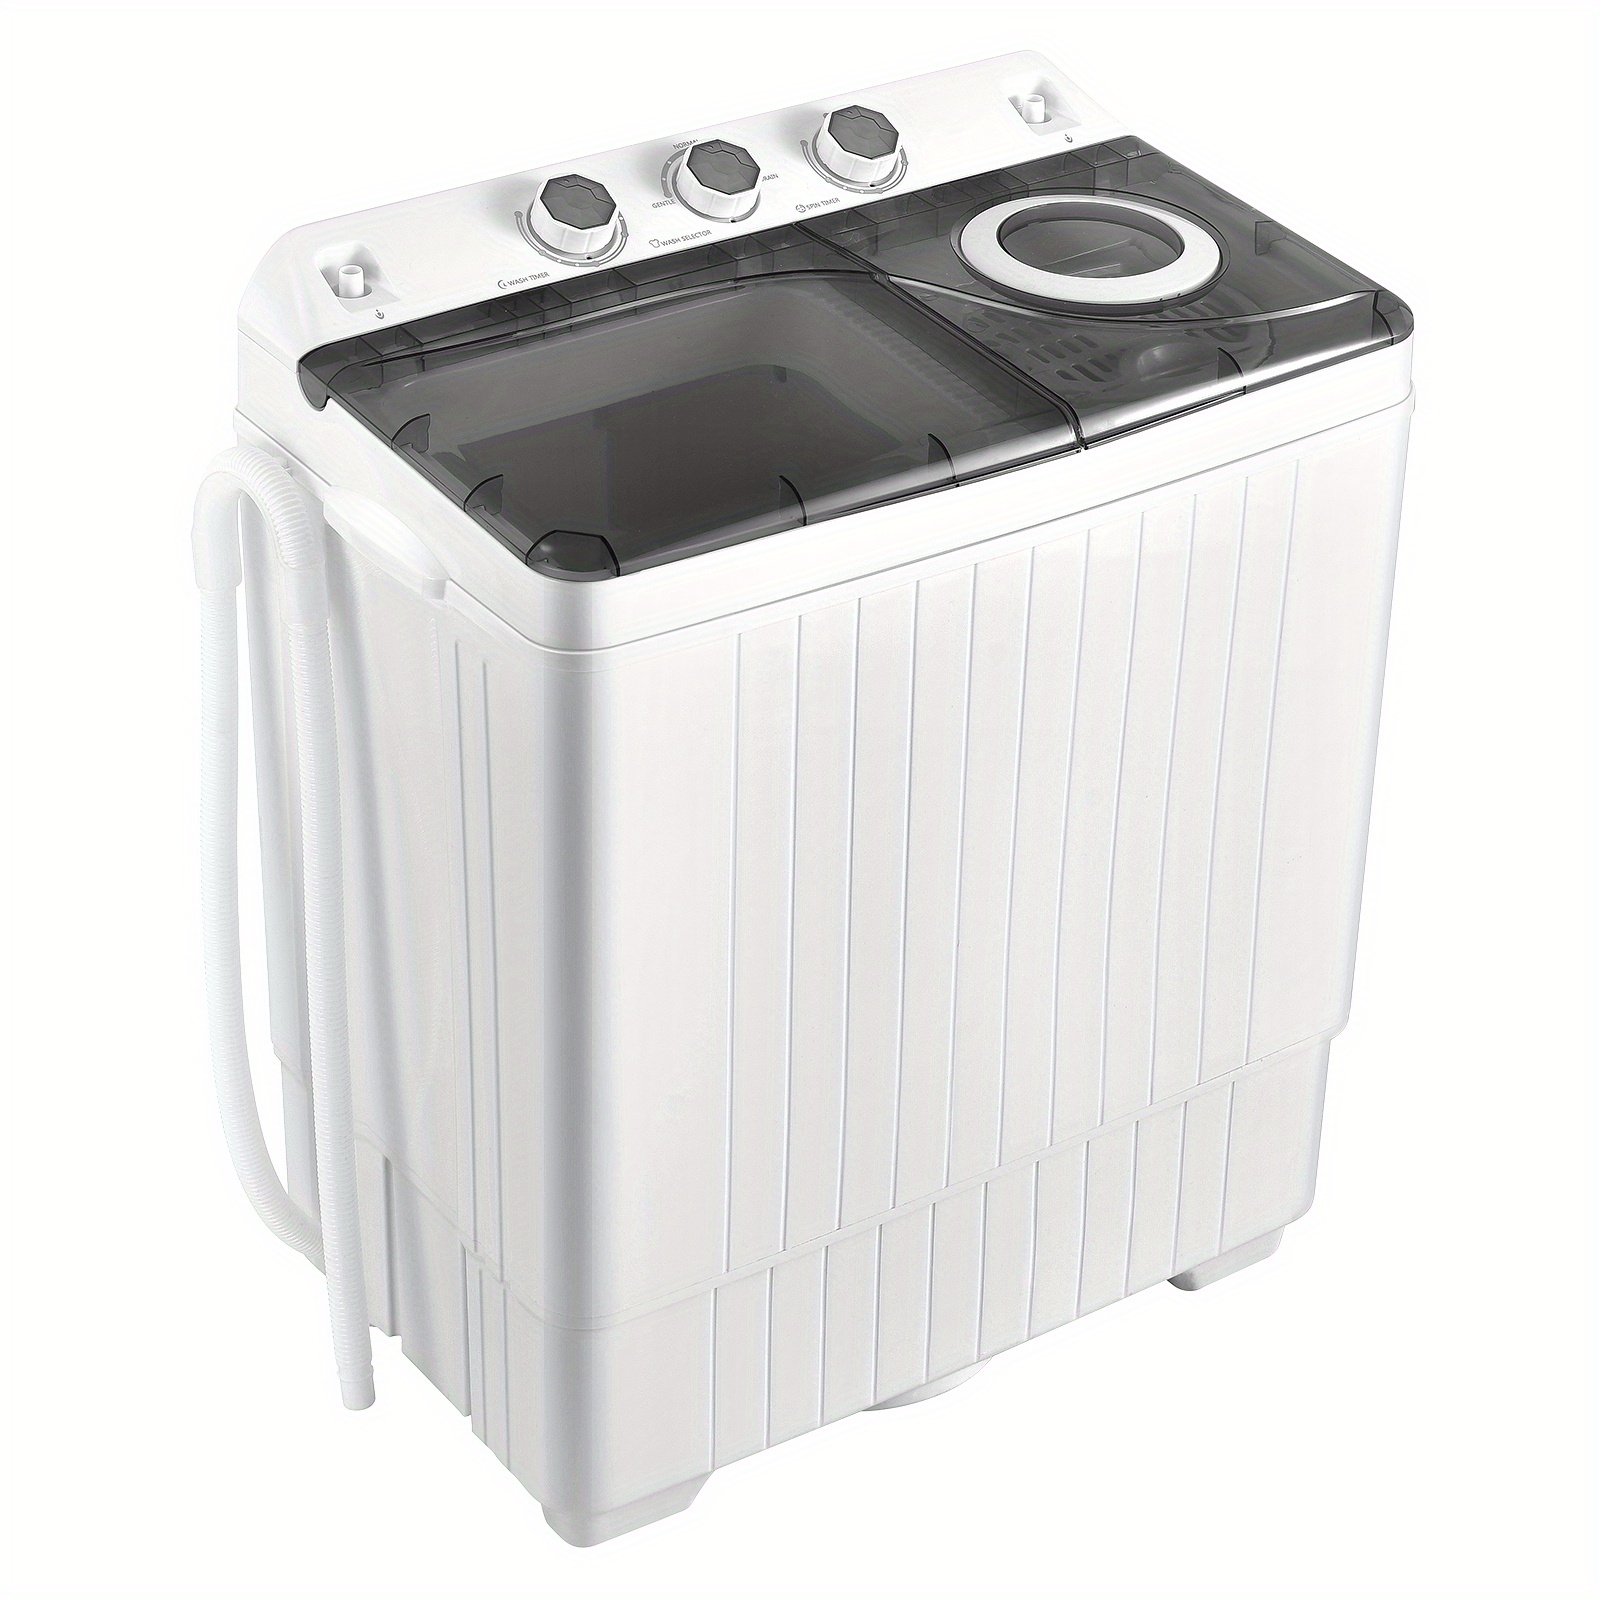 

Gymax 26lbs Portable Semi-automatic Twin Tub Washing Machine W/ Drain Pump